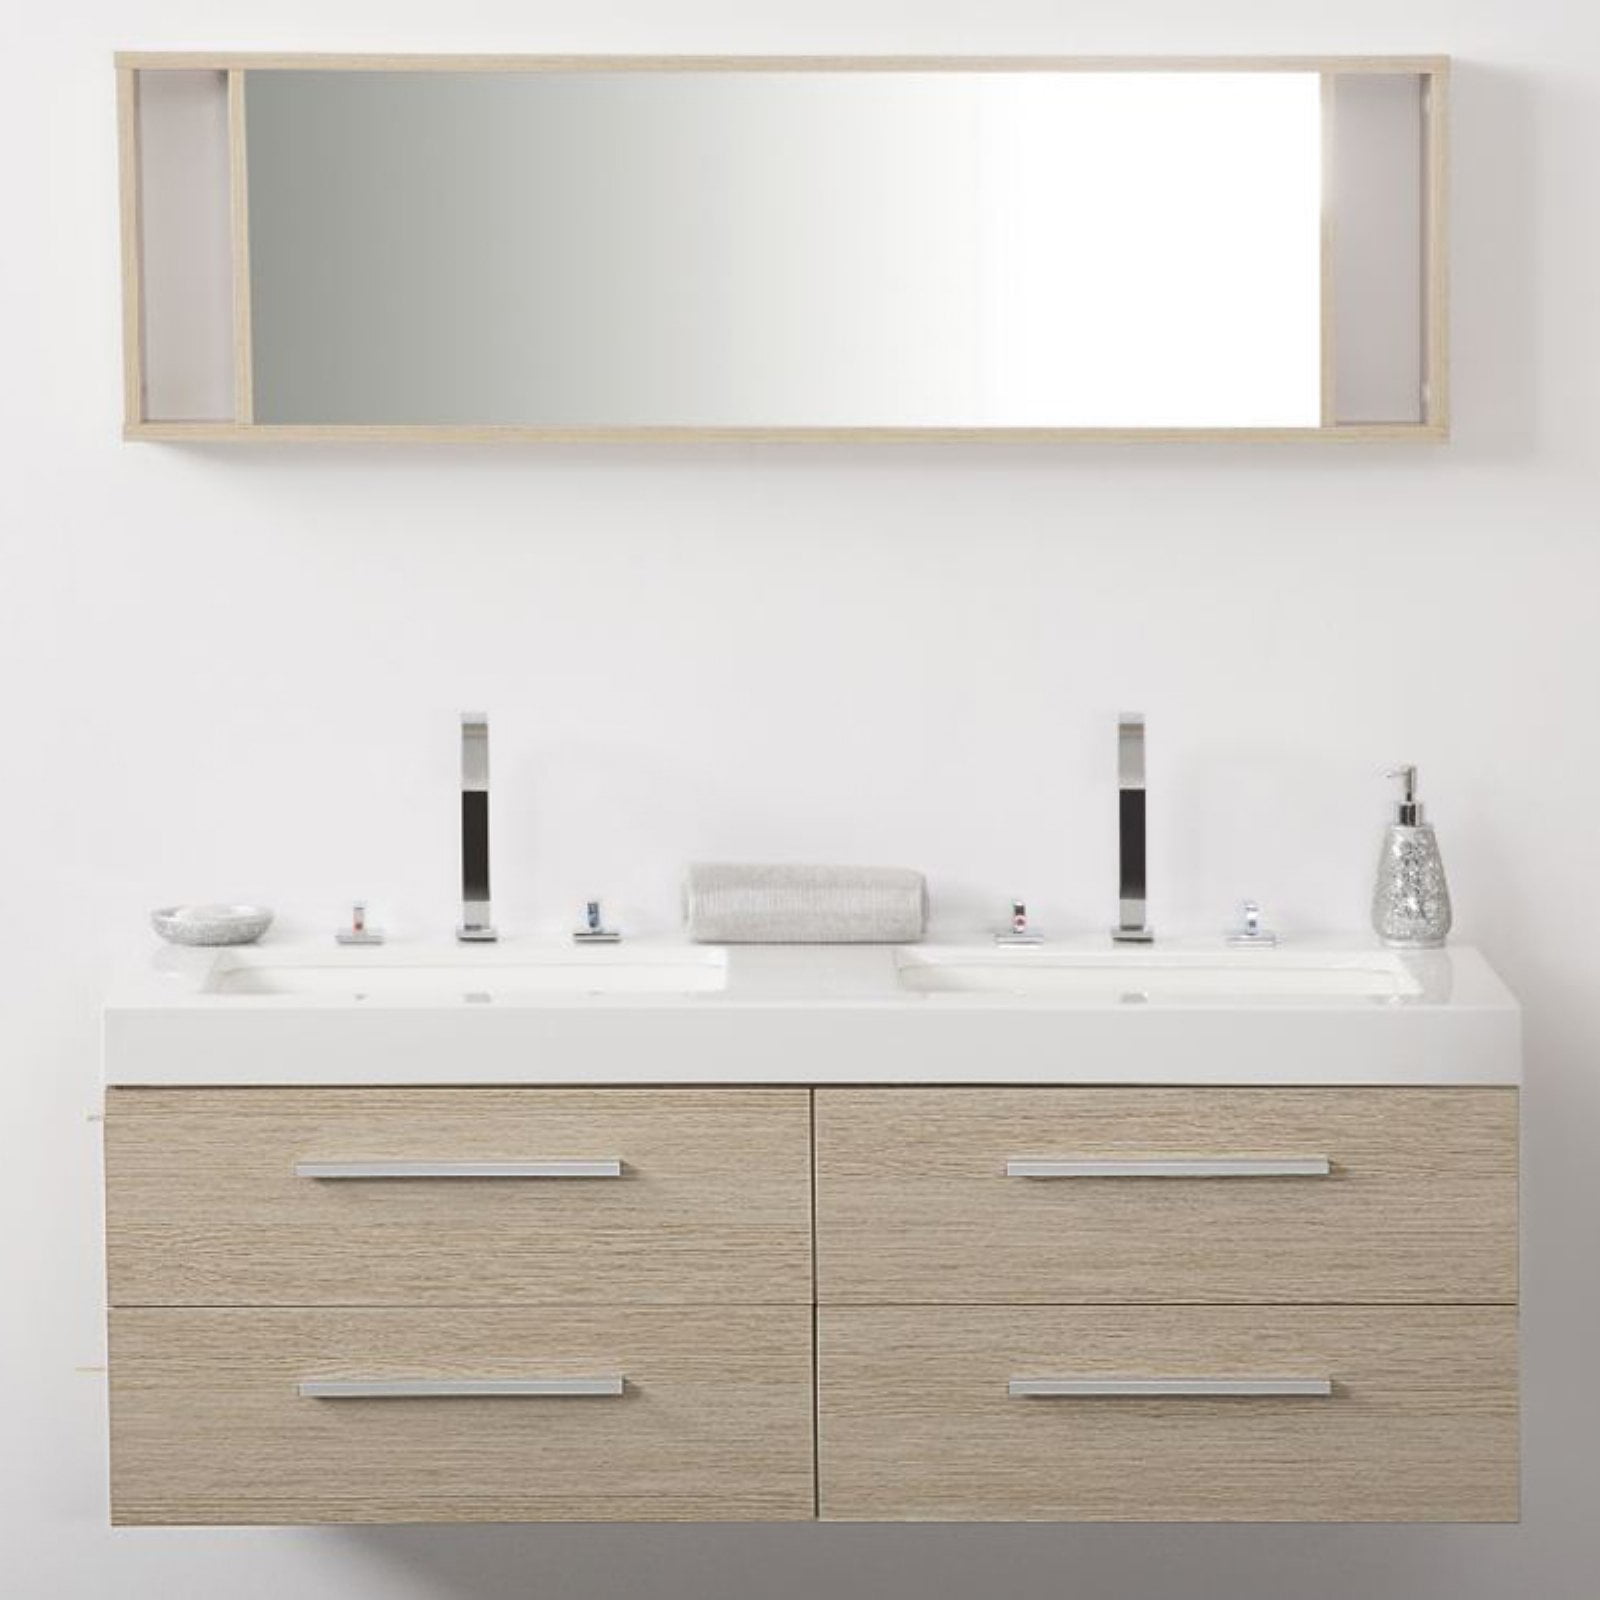 40 Inch Double Sink Vanity - www.inf-inet.com